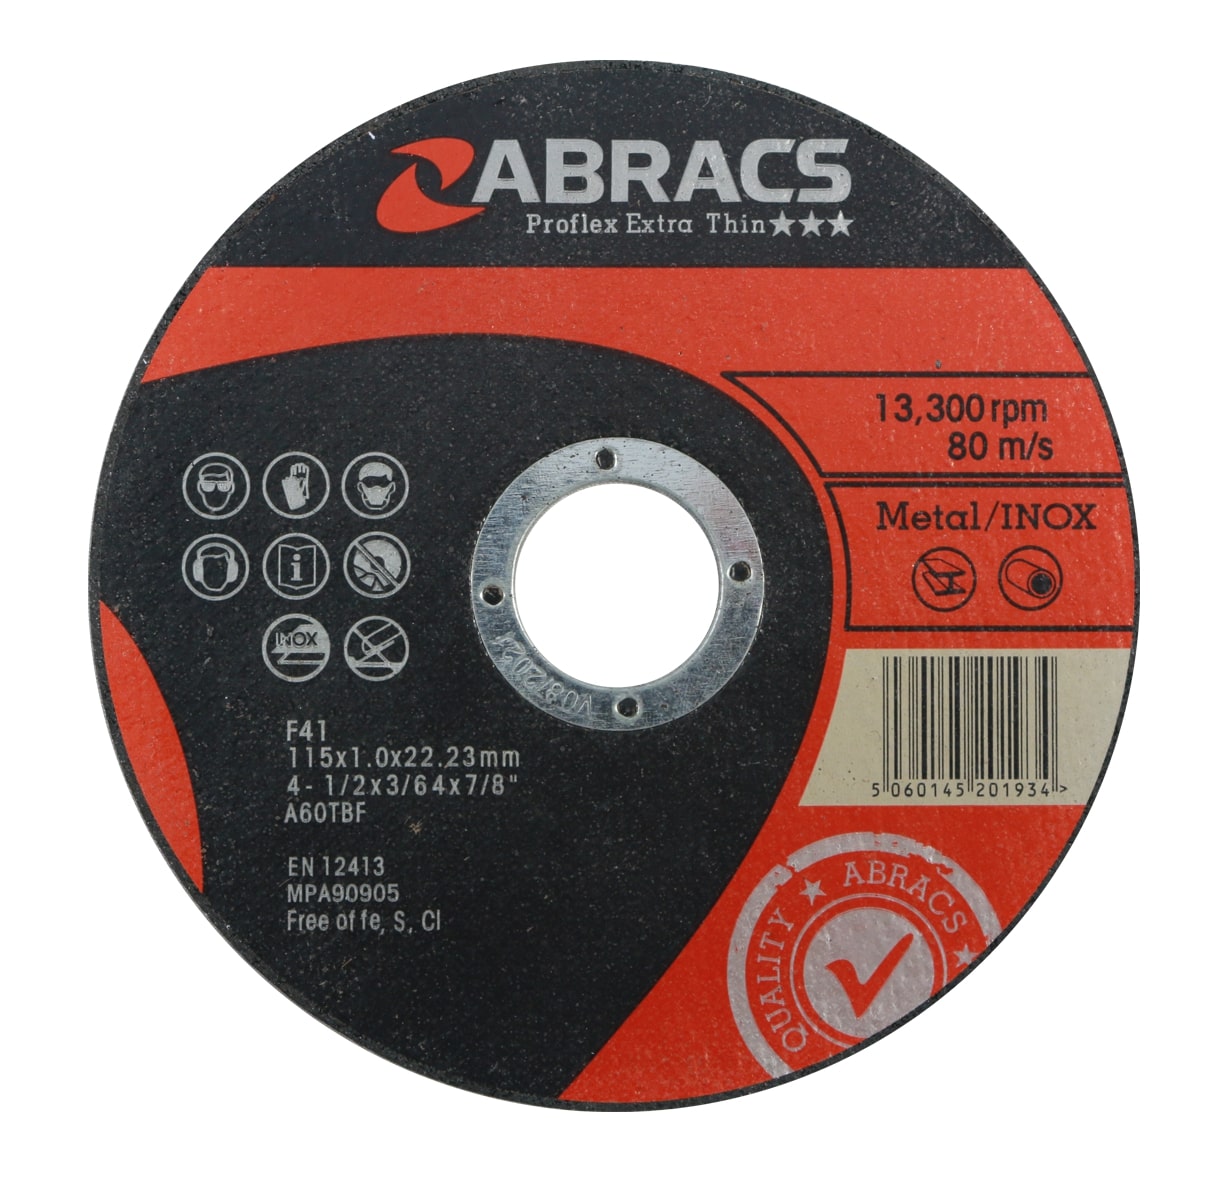 Abracs  PROFLEX EXTRA THIN 115mm x 1.0mm INOX Cutting Disc